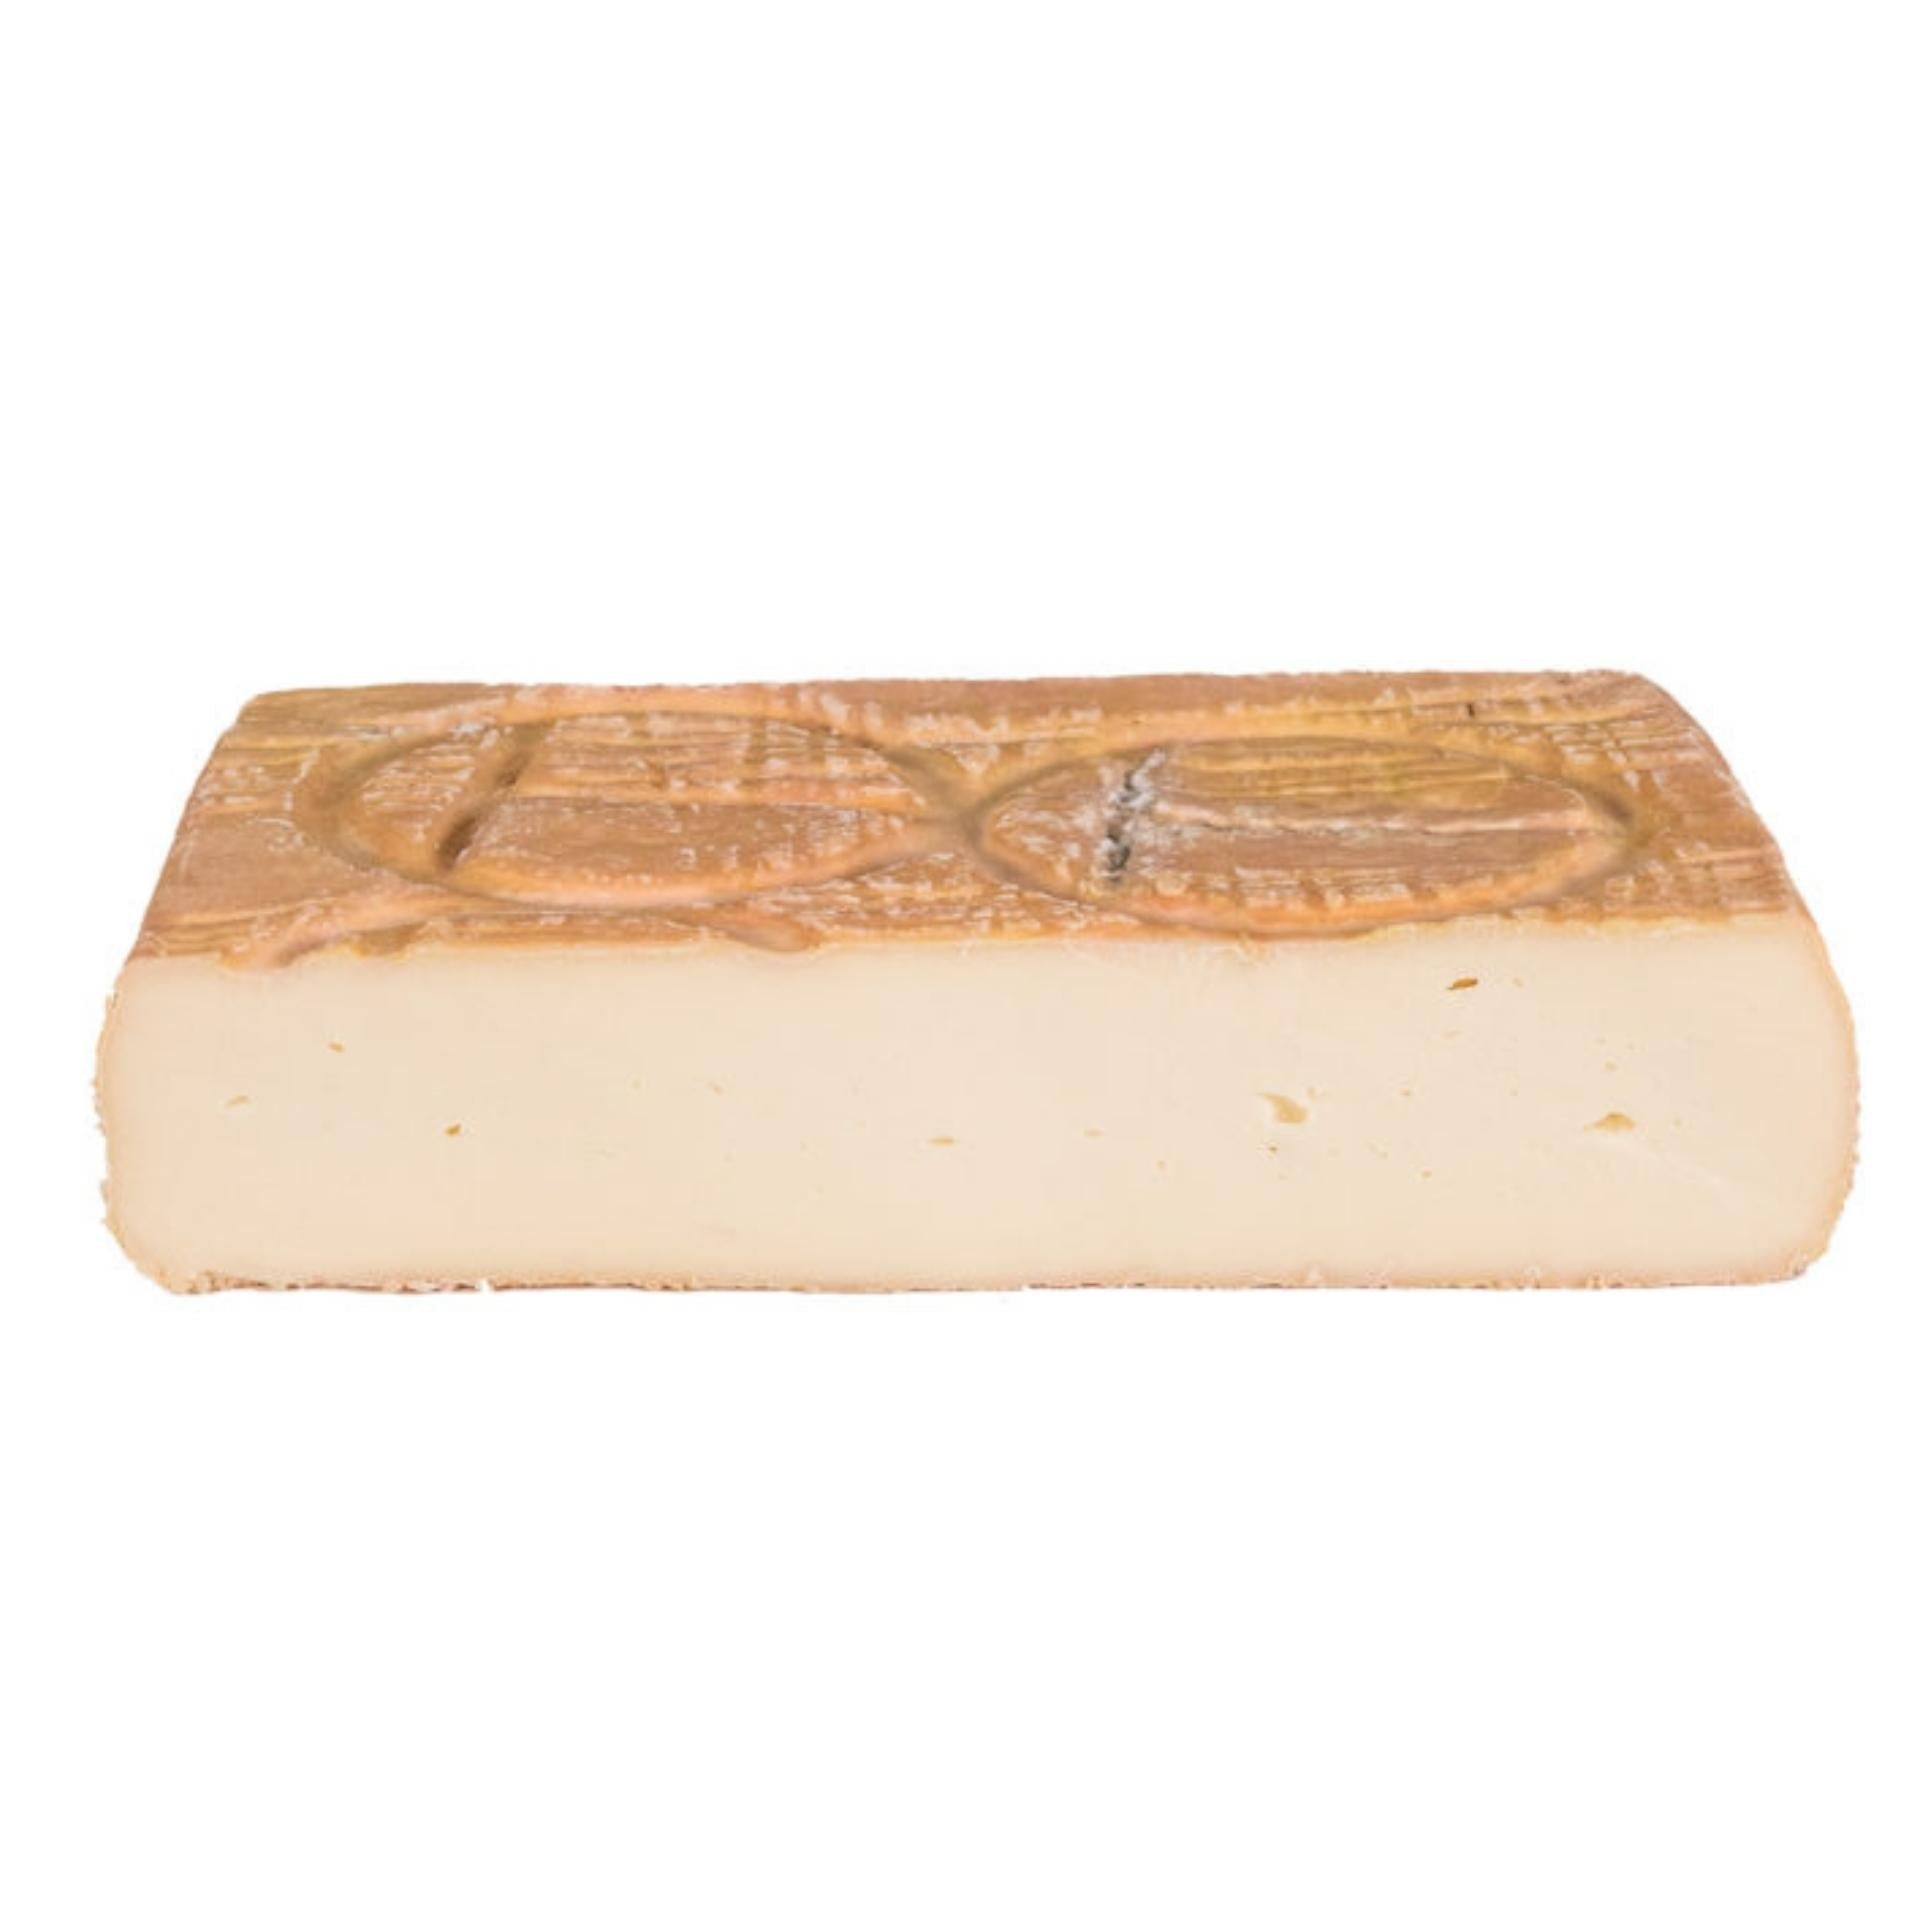 Whole block of Taleggio DOP cheese